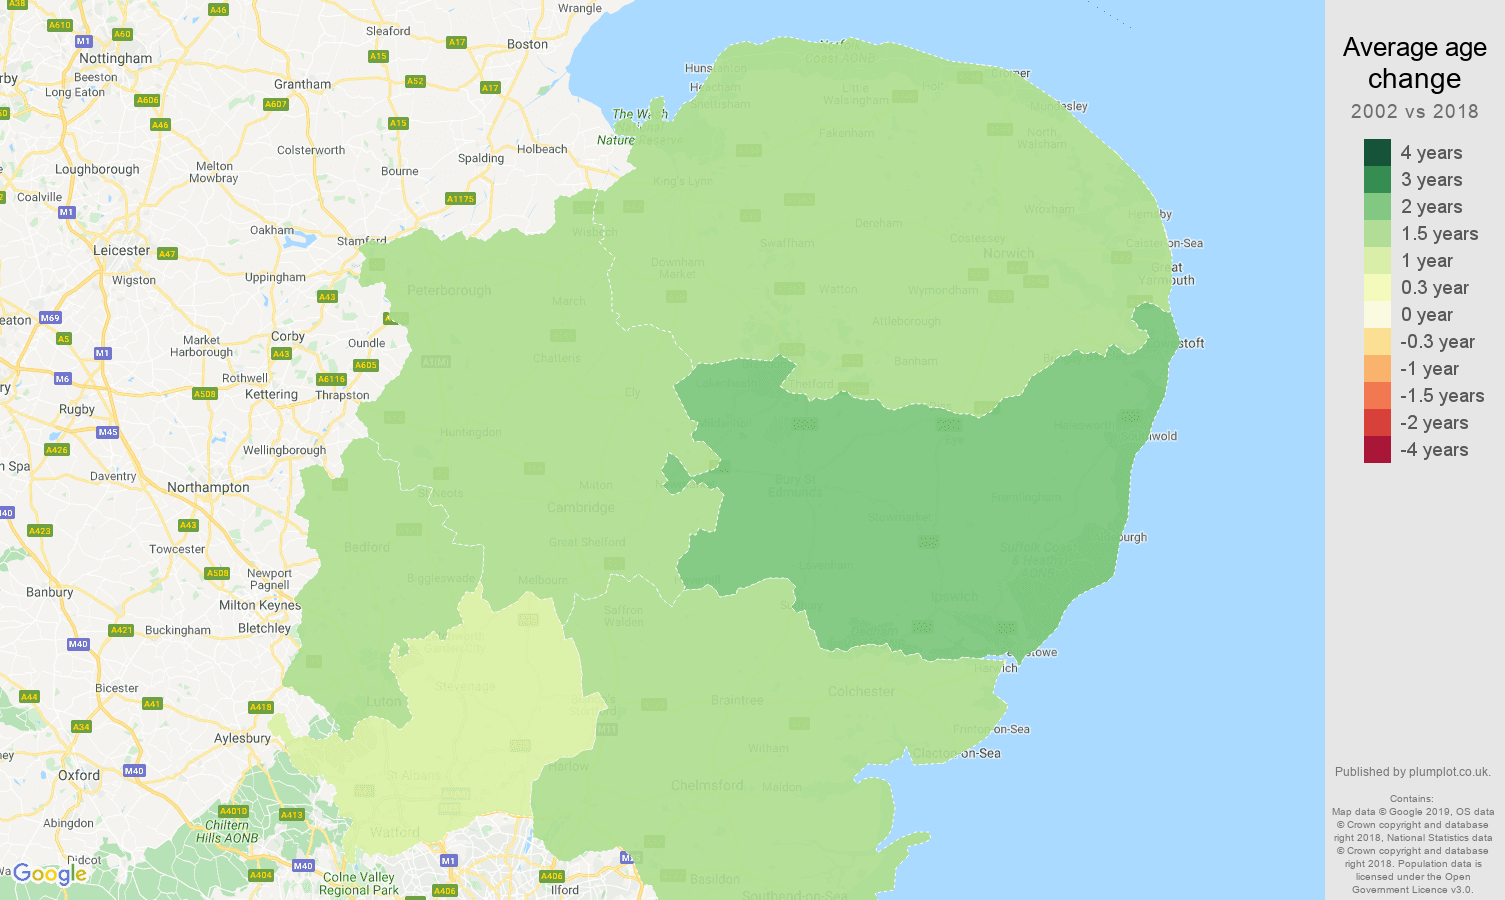 East of England average age change map